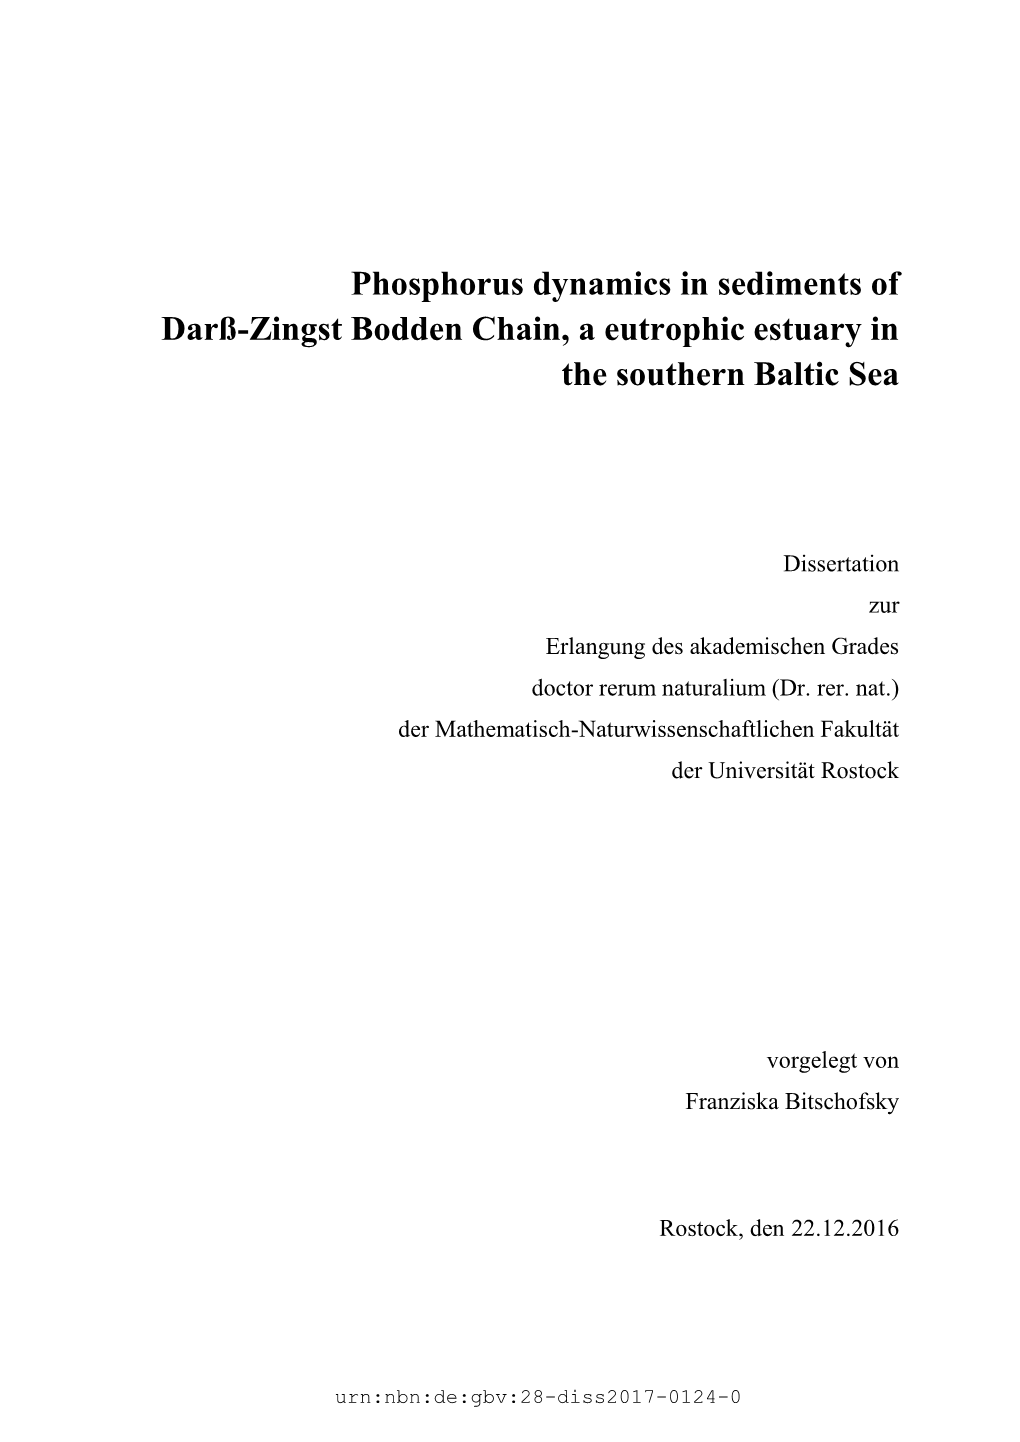 Phosphorus Dynamics in Sediments of the Darß-Zingst Boddenchain, A